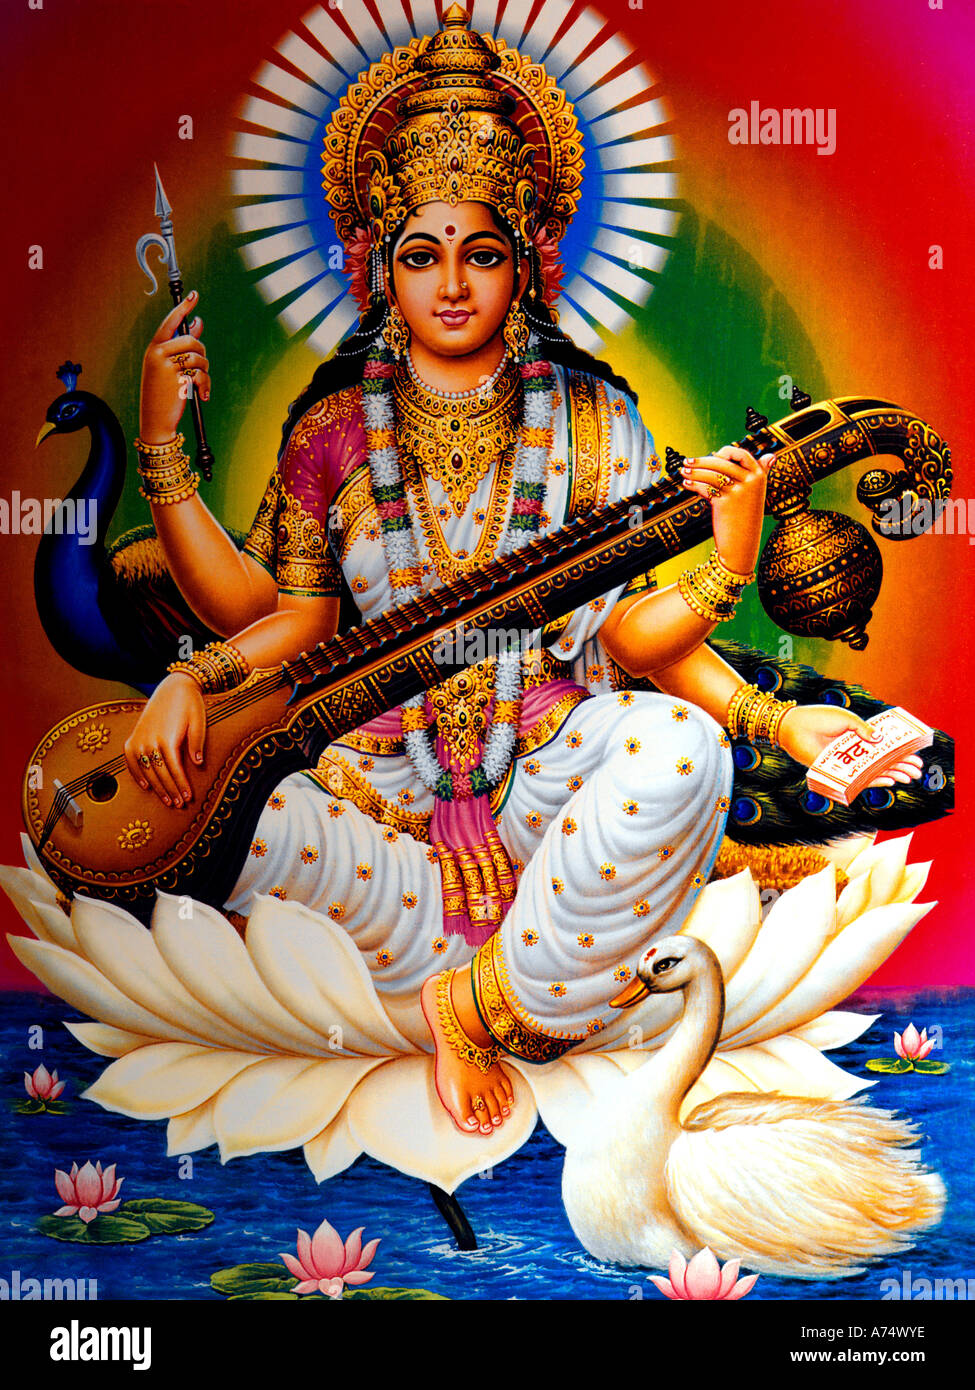 Saraswati Hindu Goddess of Learning Wisdom Music and the Arts Stock Photo